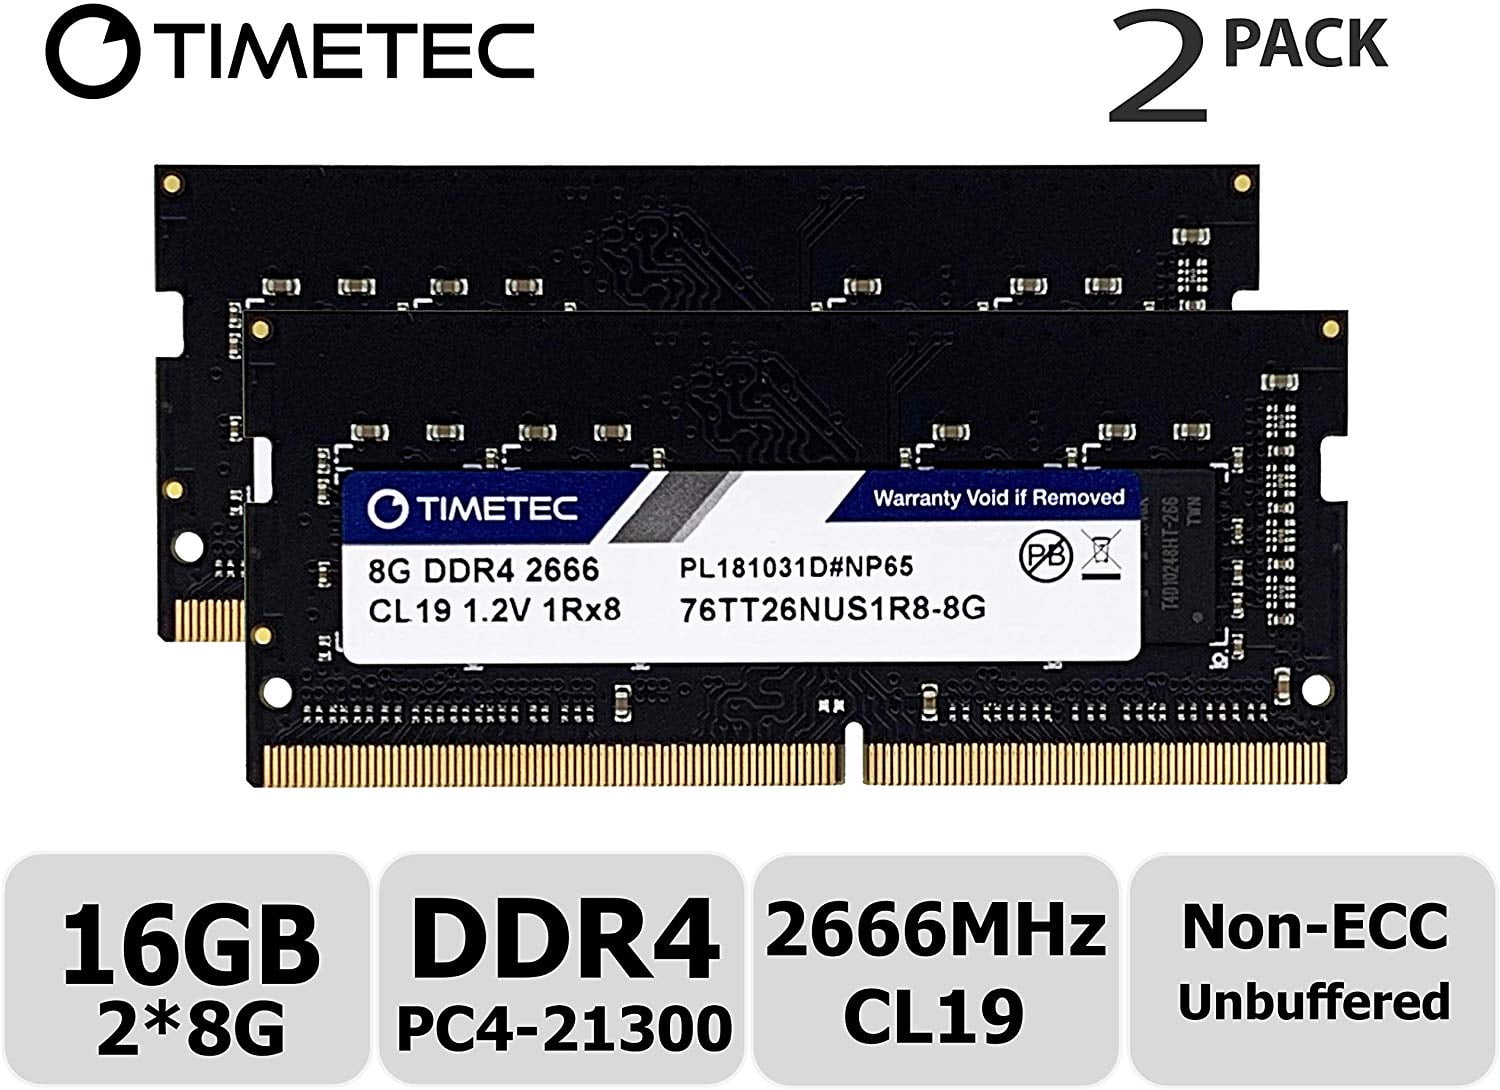 2x8GB 16GB Kit DDR4 2666MHz PC4-21300 Unbuffered Non-ECC 1.2V CL19 1Rx8 Single Rank 288 Pin UDIMM Desktop Memory RAM Module Upgrade Timetec Hynix IC 16GB Kit 2x8GB 